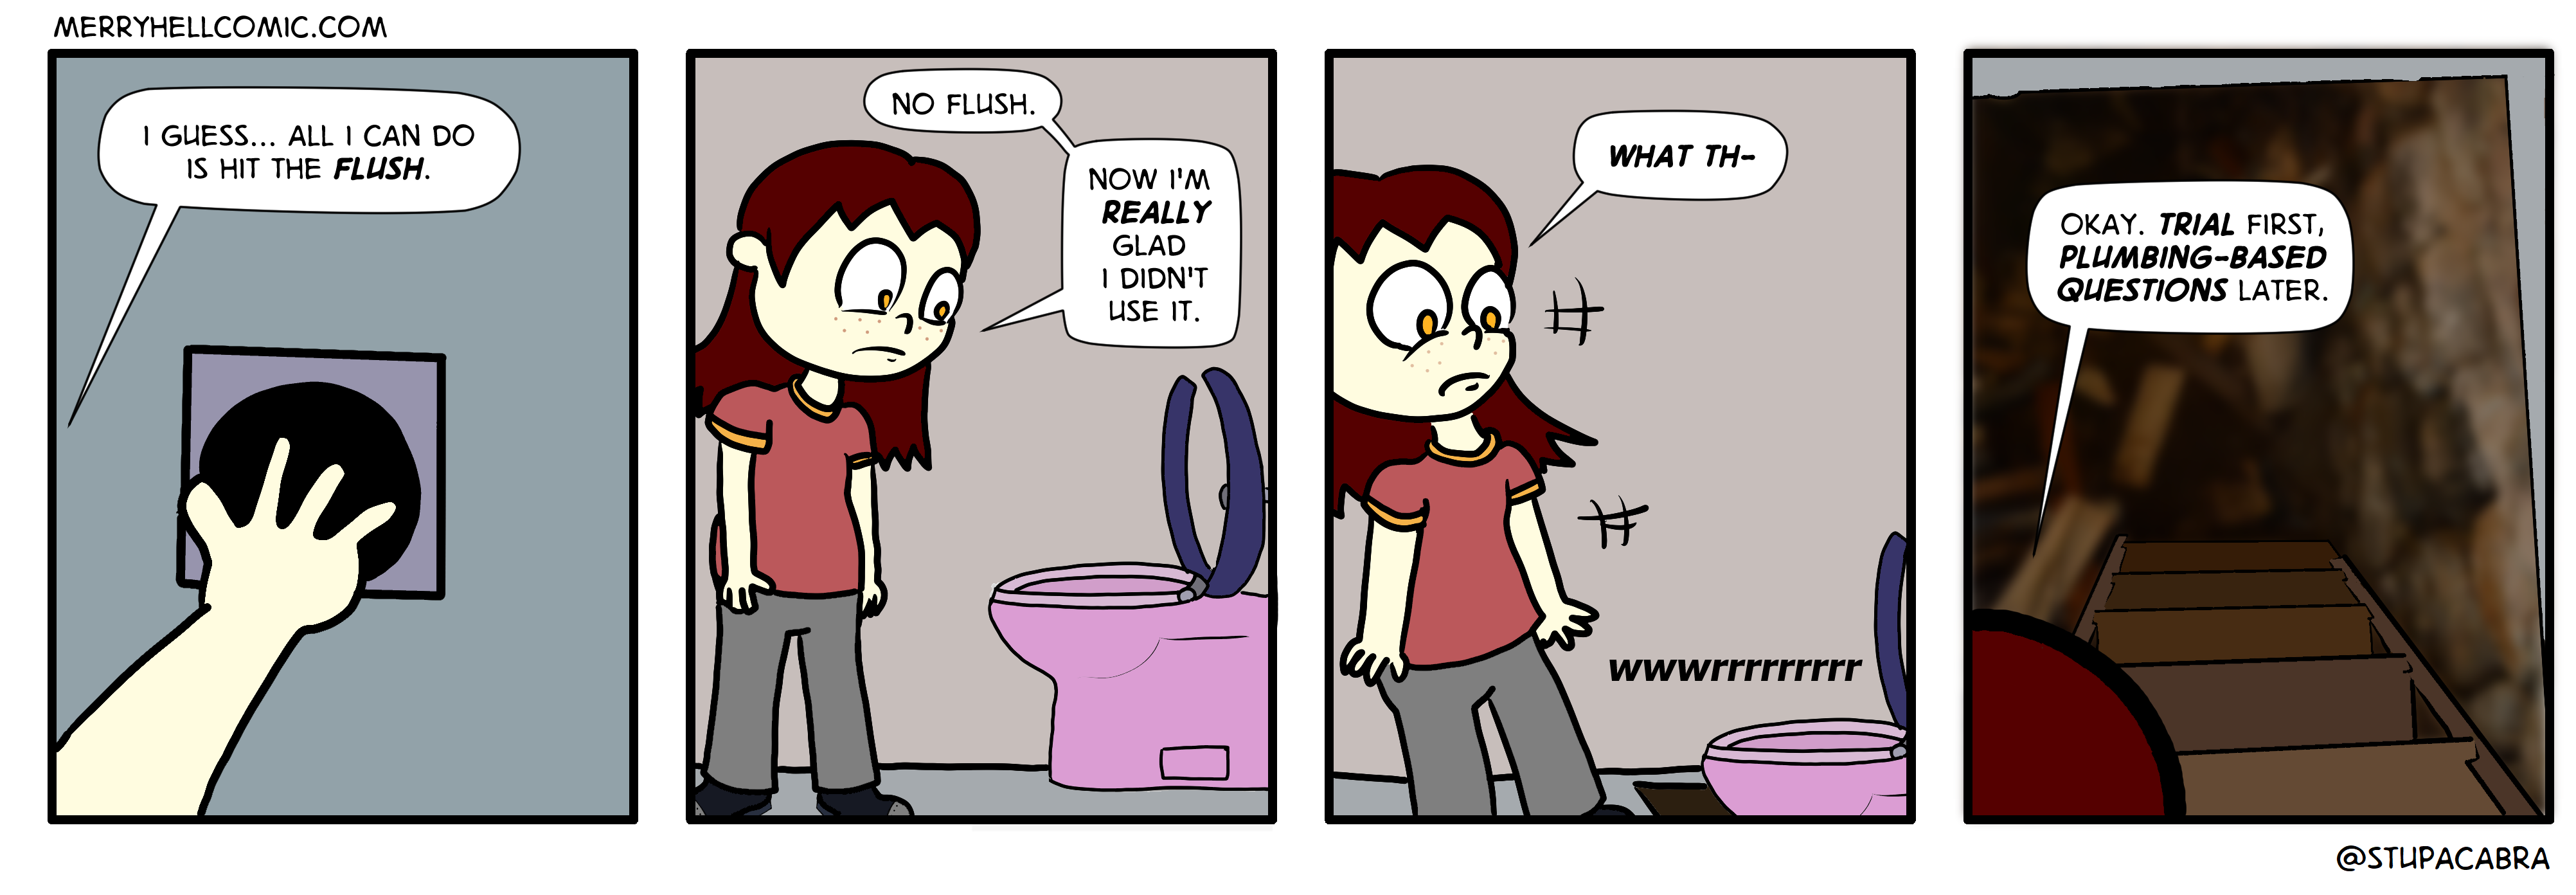 471. The flush